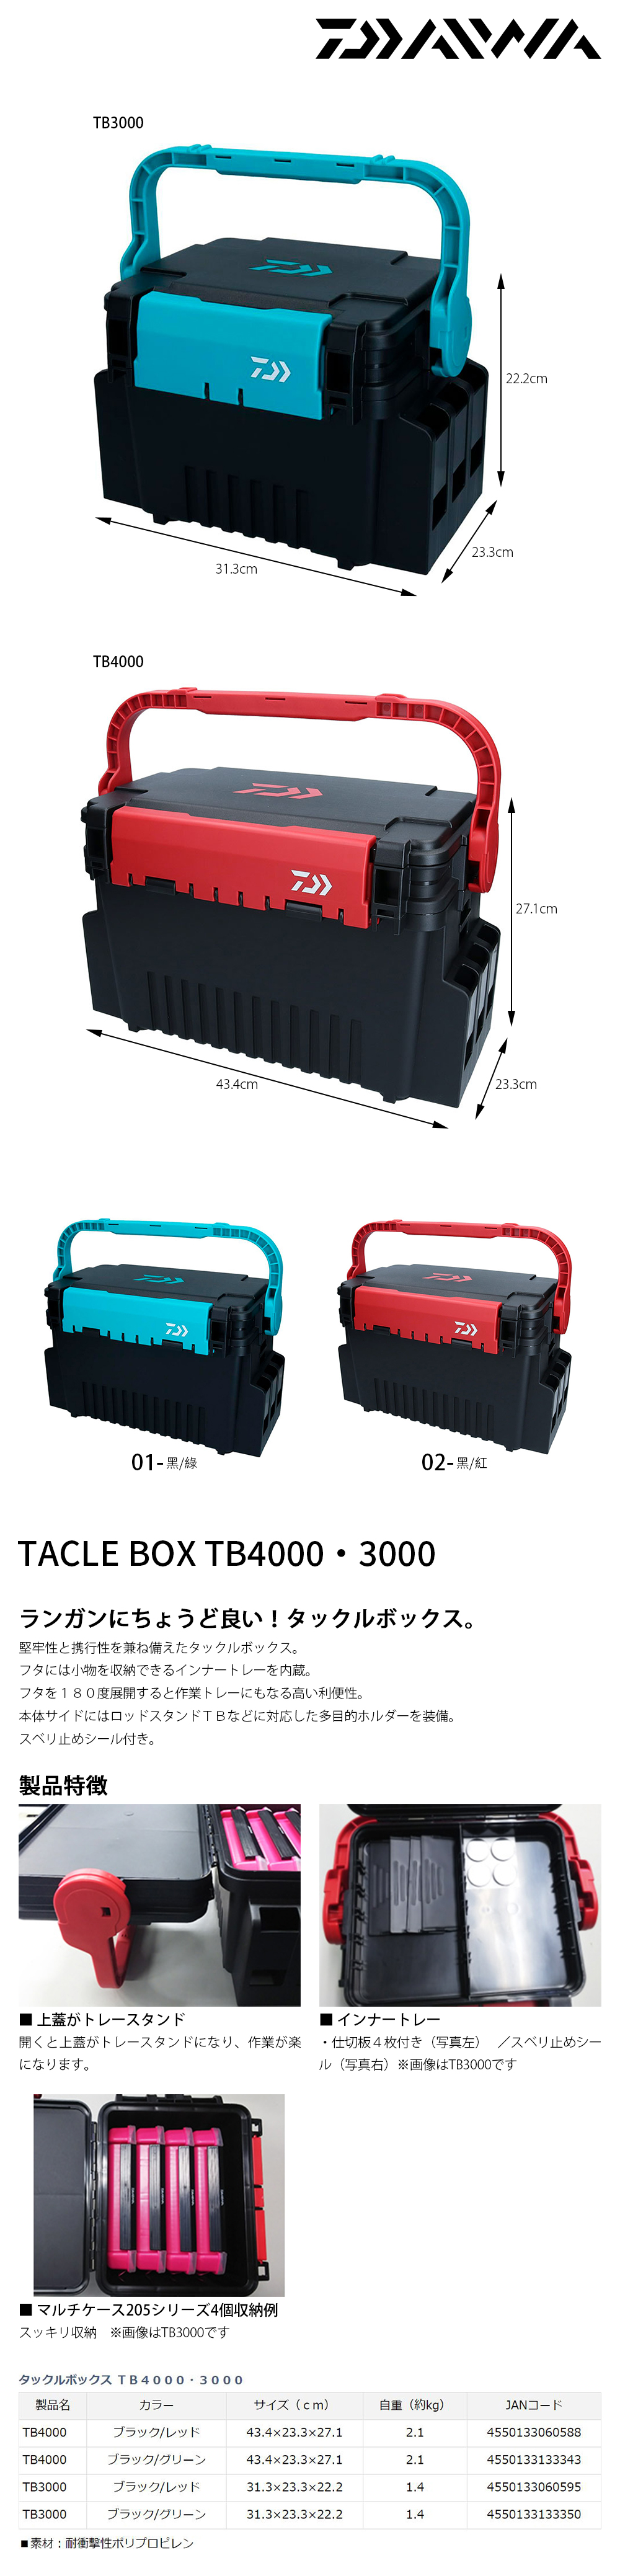 DAIWA TACKLE BOX TB4000 [工具箱] - 漁拓釣具官方線上購物平台